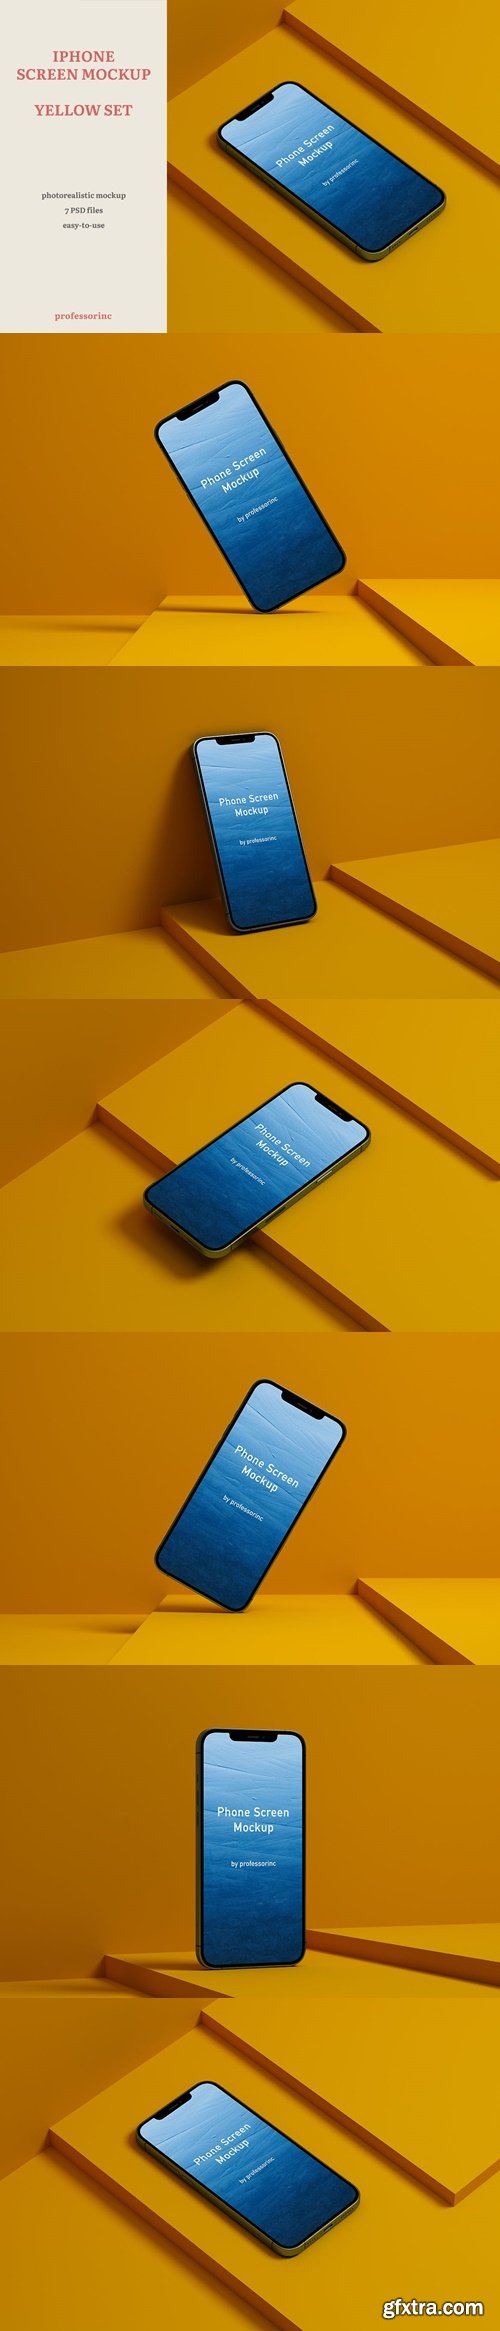 iPhone Screen Mockup — Yellow Set